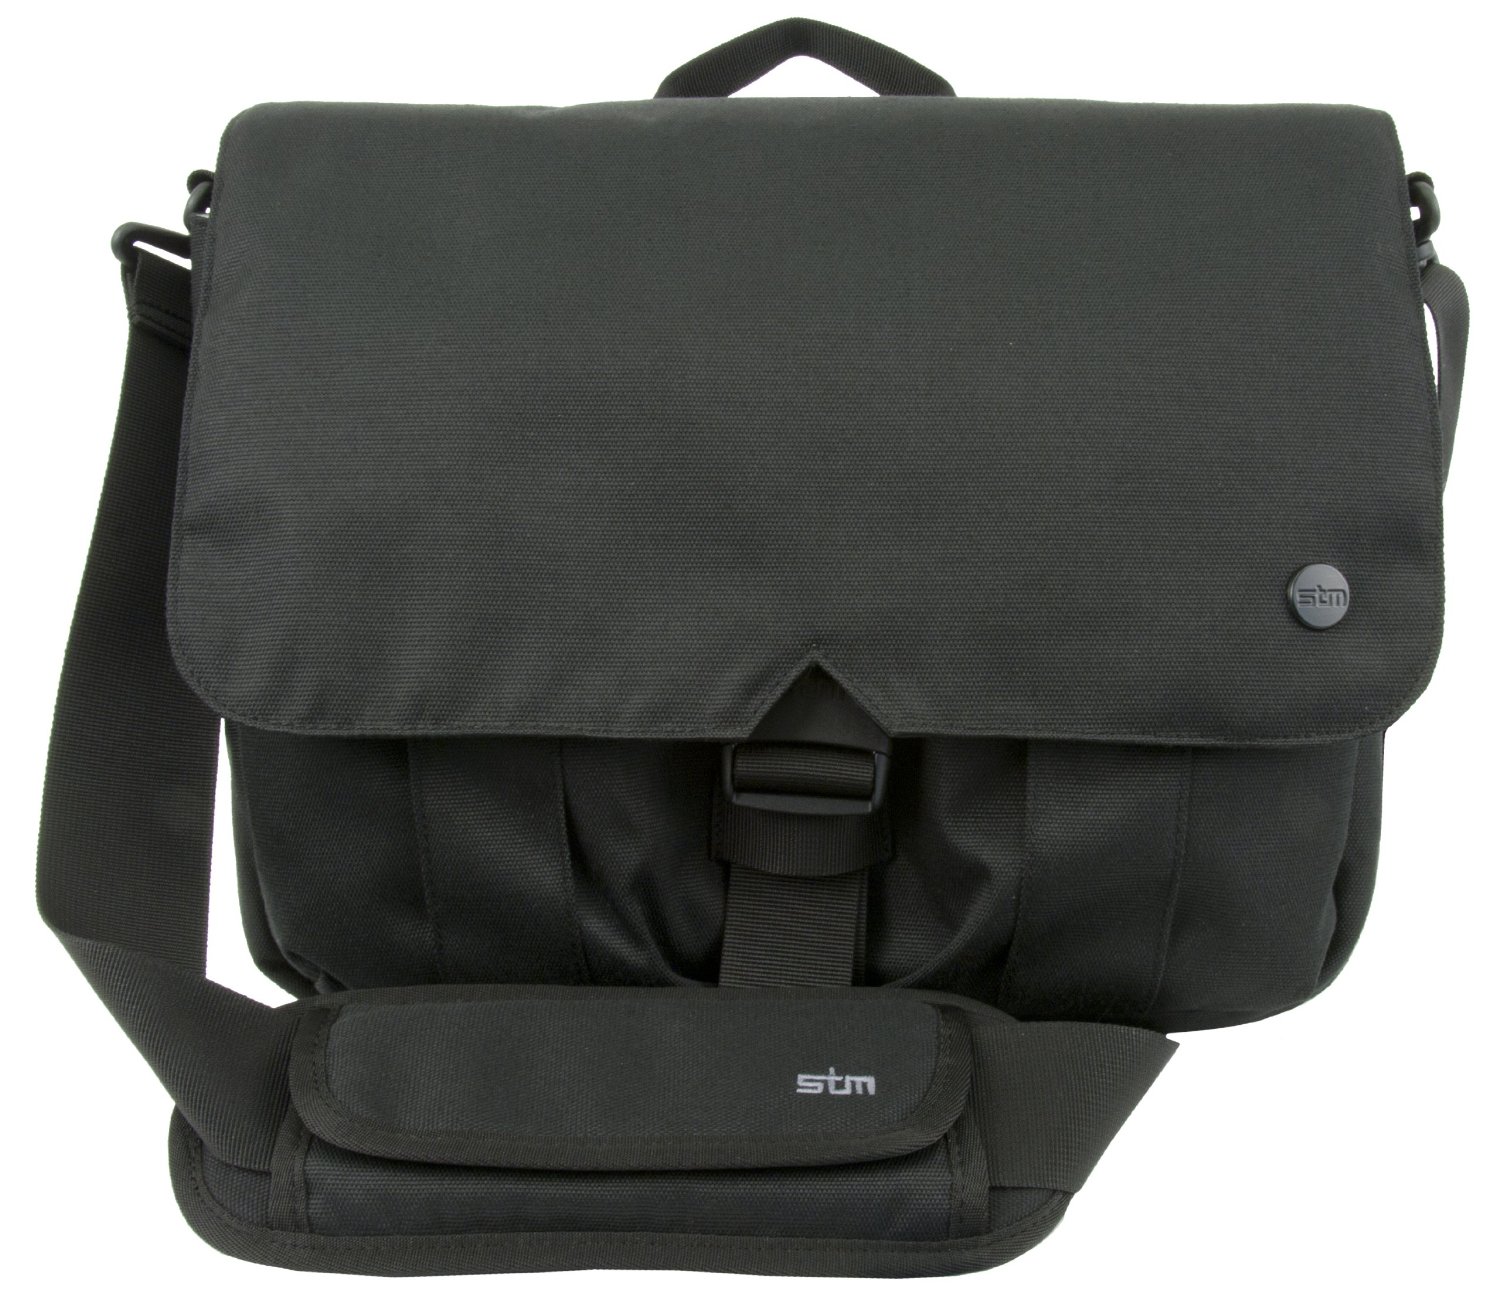 STM Bags Scout 2 Medium (Black)  $48.45